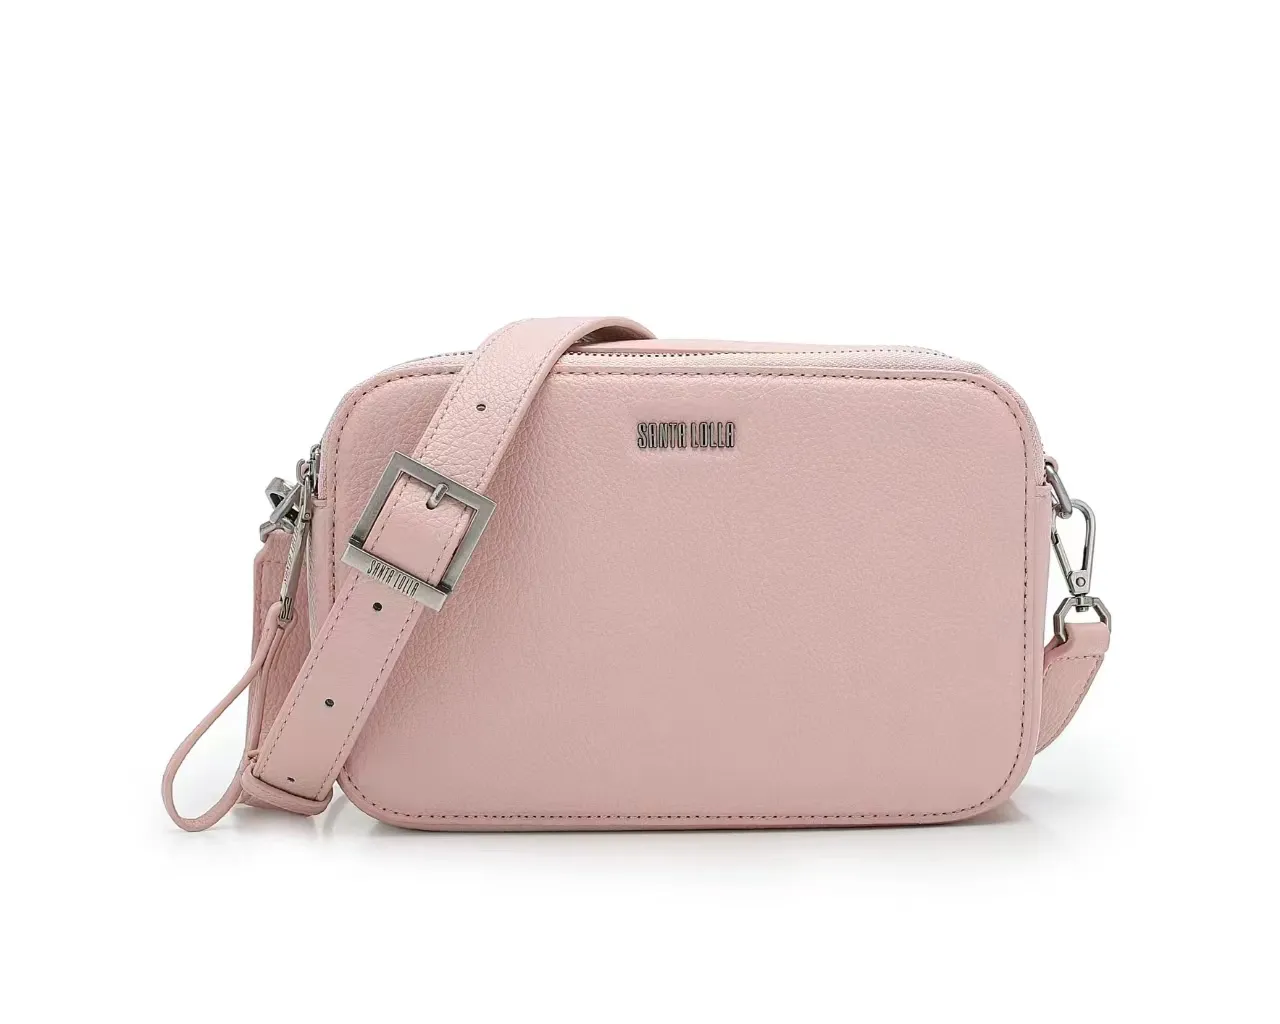 Wholesale Shein Bales Brand New Cheap Price Luxury Crossbody Leather Shoulder Bags Women Handbags Ladies HB01